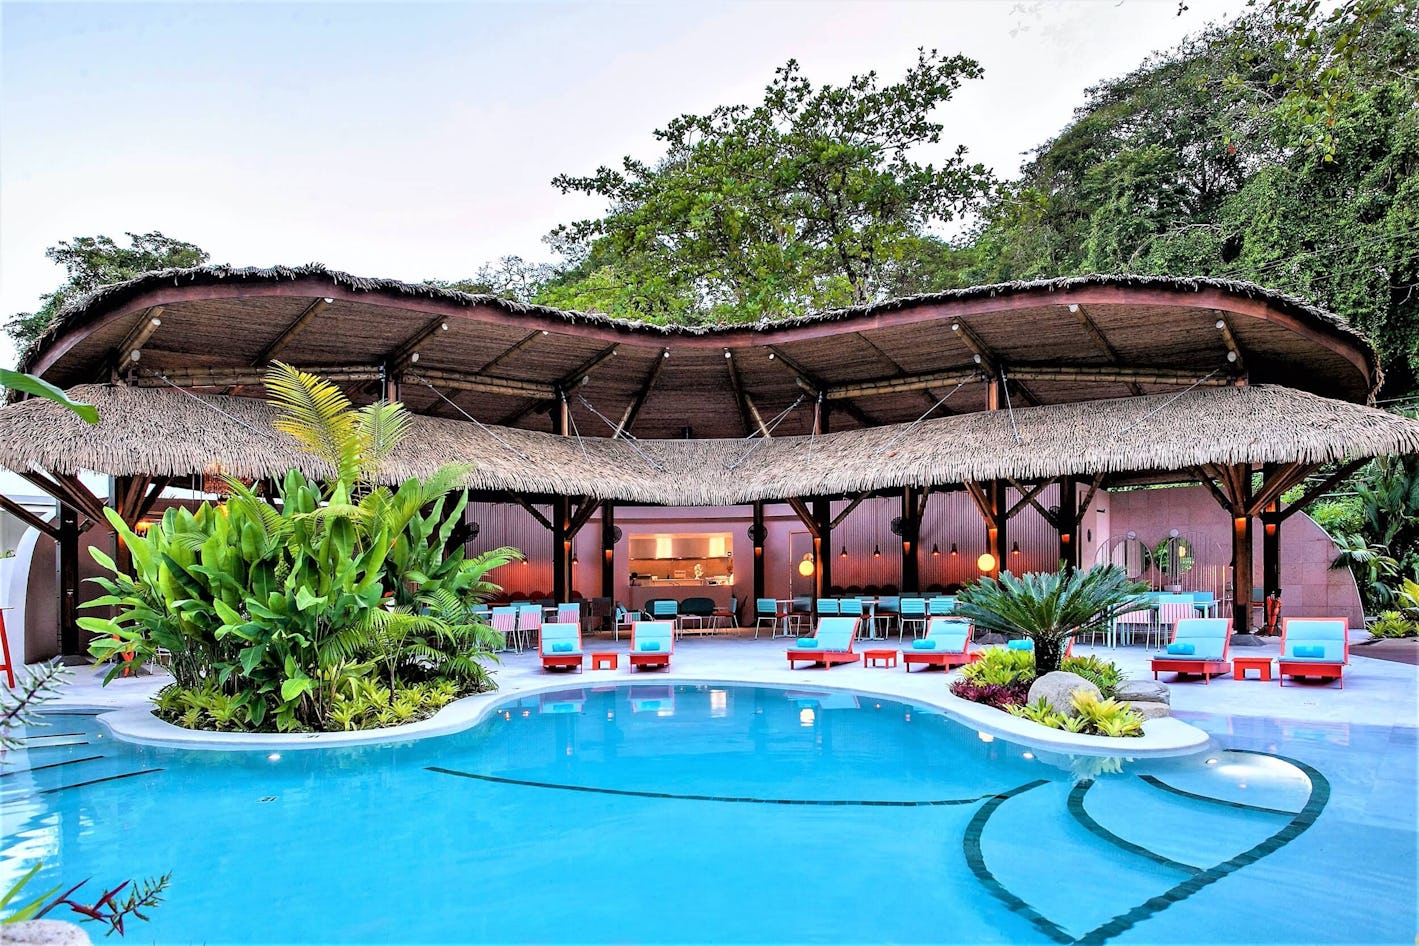 Boutique Hotel Aguas Claras - Puerto Viejo, Costa Rica